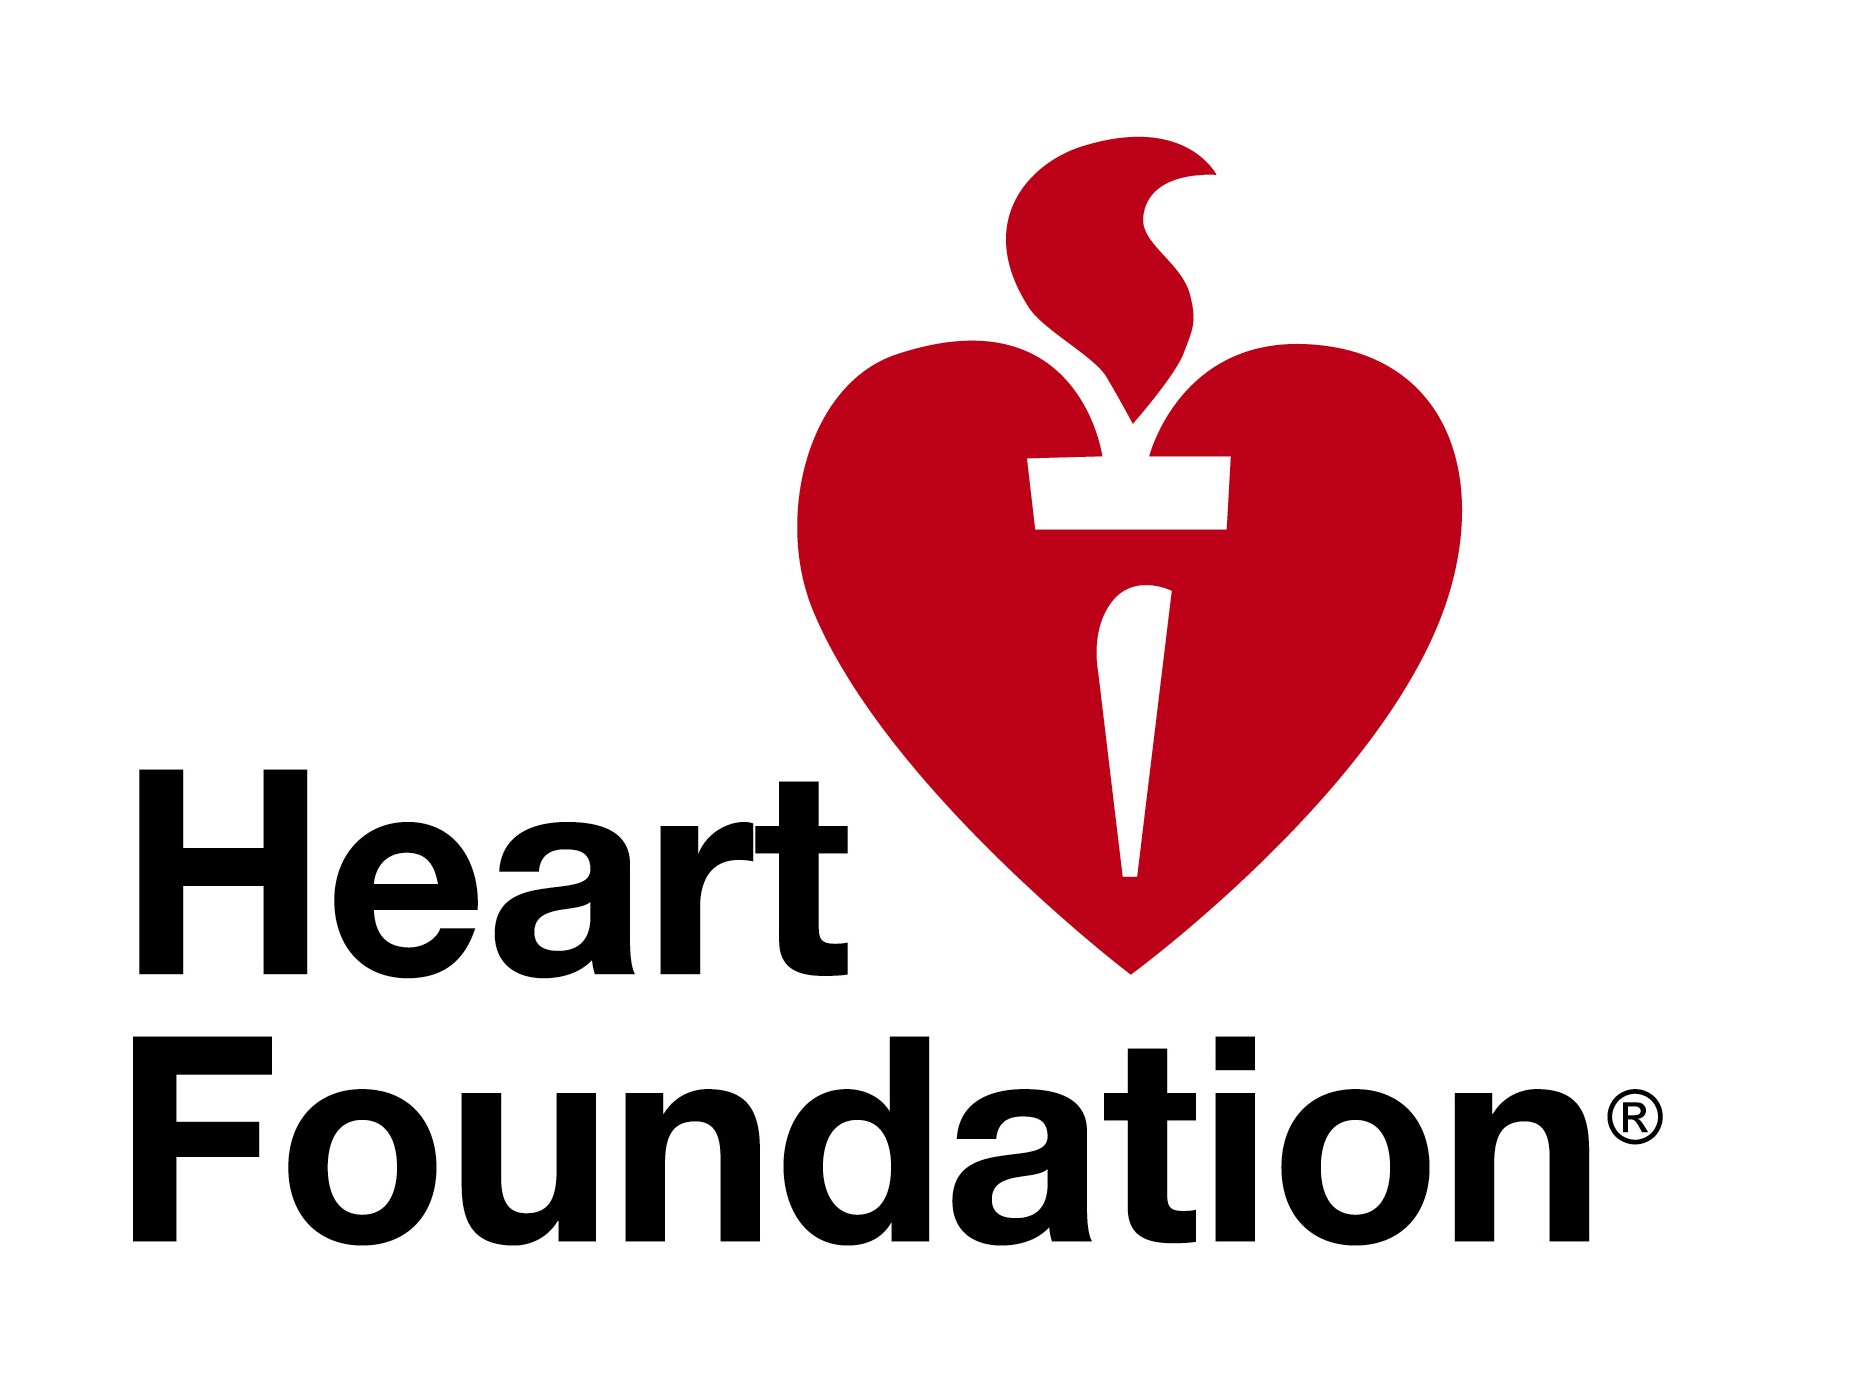 National Heart Foundation logo